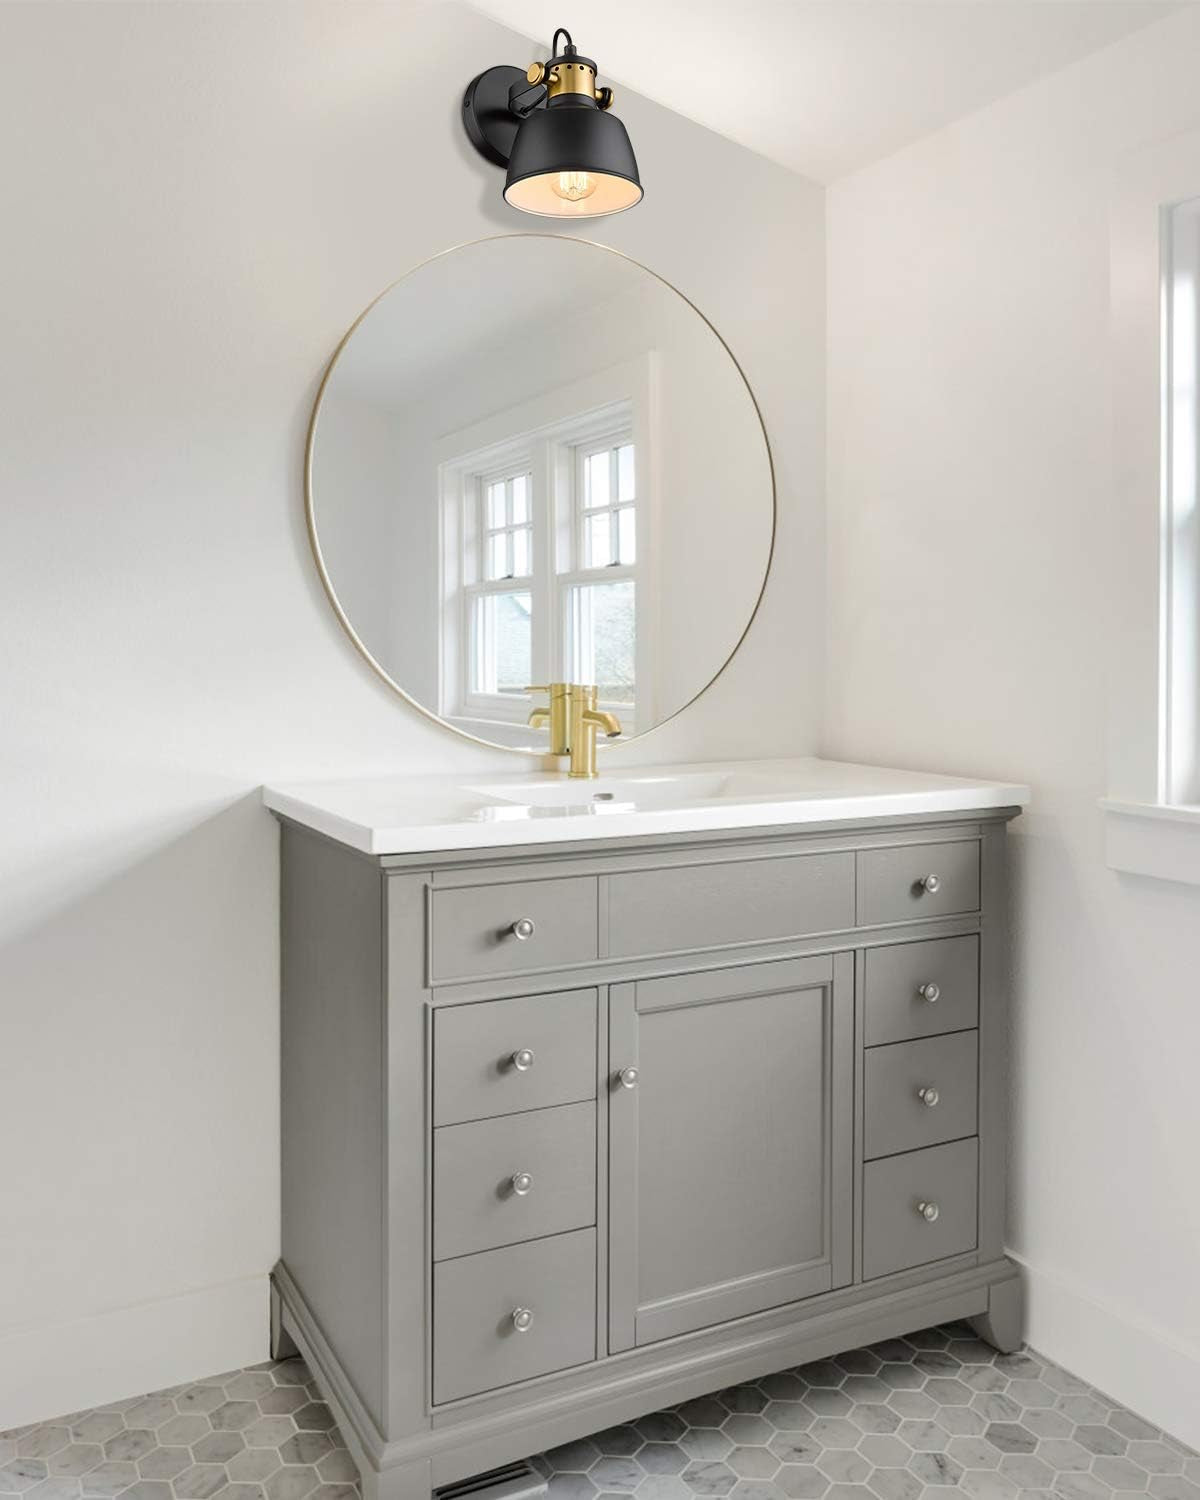 1-Light Vanity Light Fixture, Industrial Wall Sconce with Black Metal Shade Bathroom Wall Light Fixture W3700-1 BK